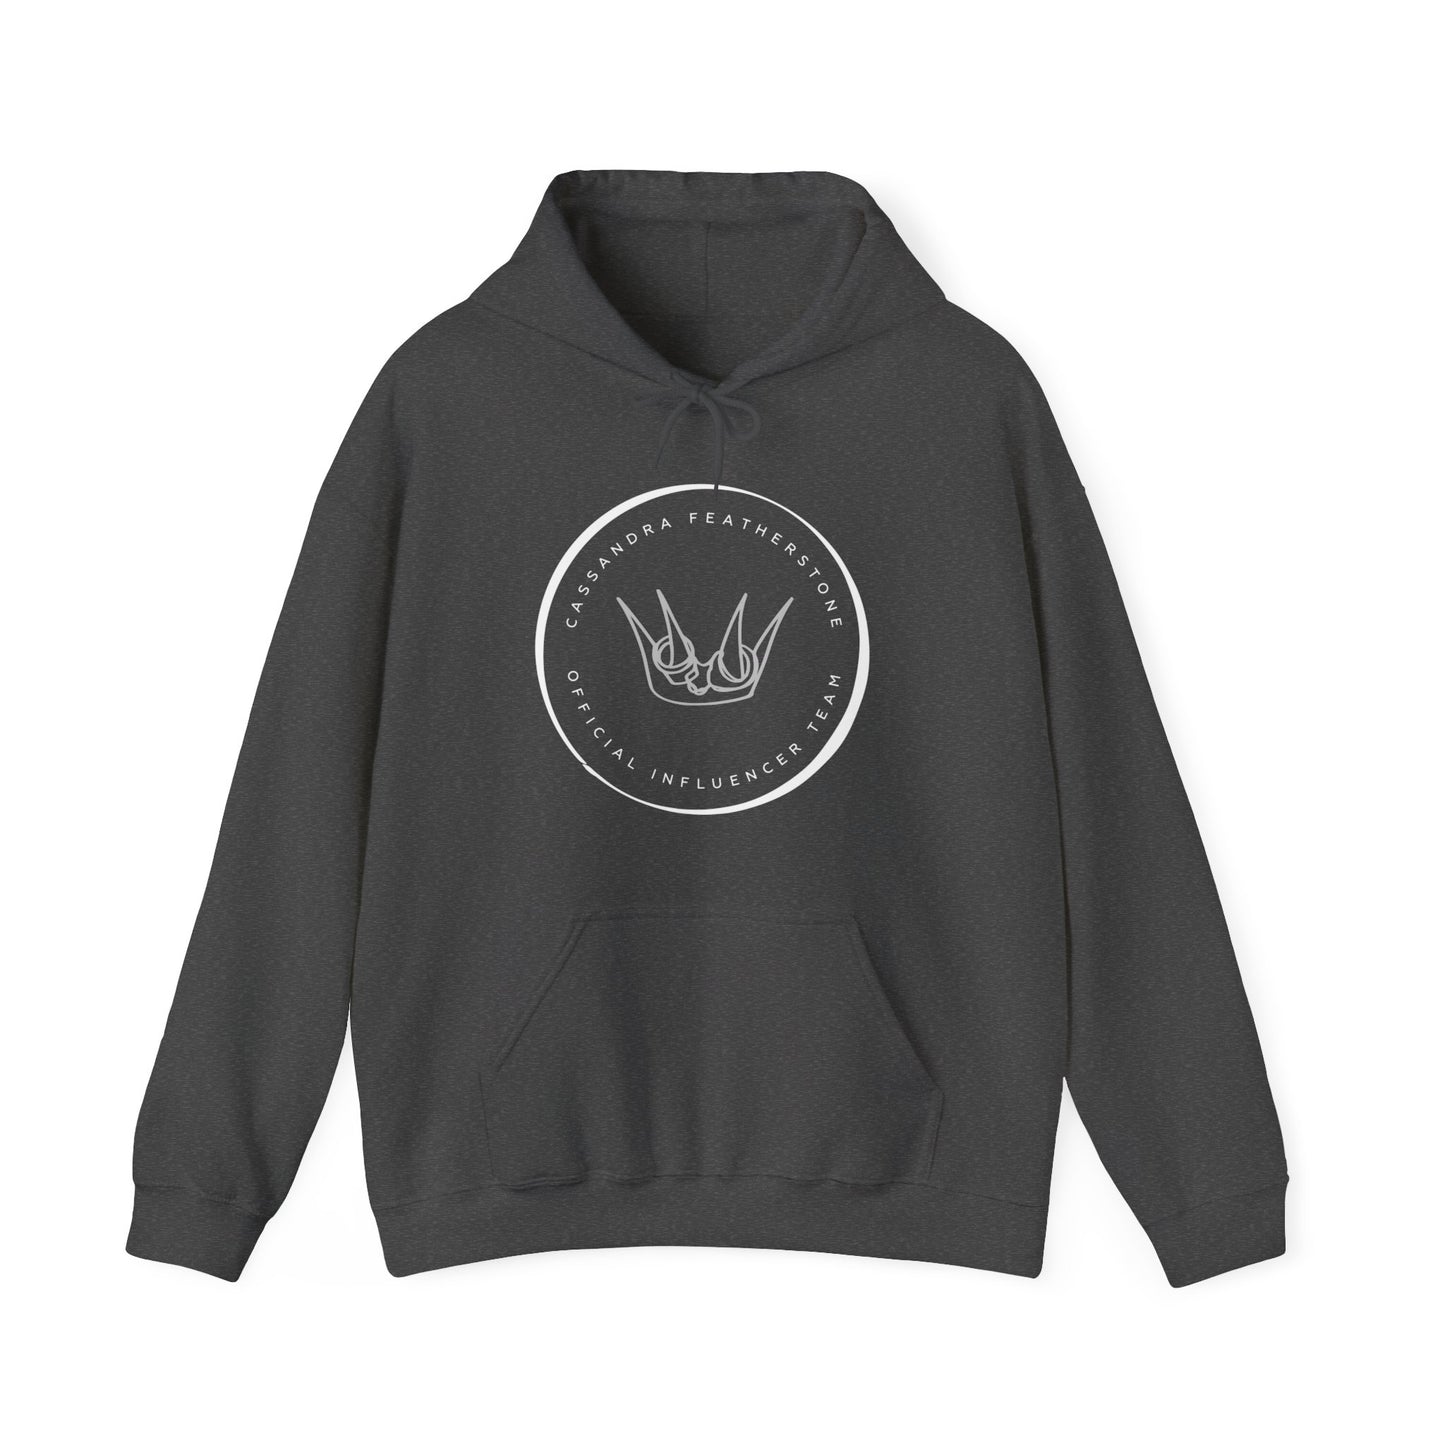 Influencer Team Hooded Sweatshirt